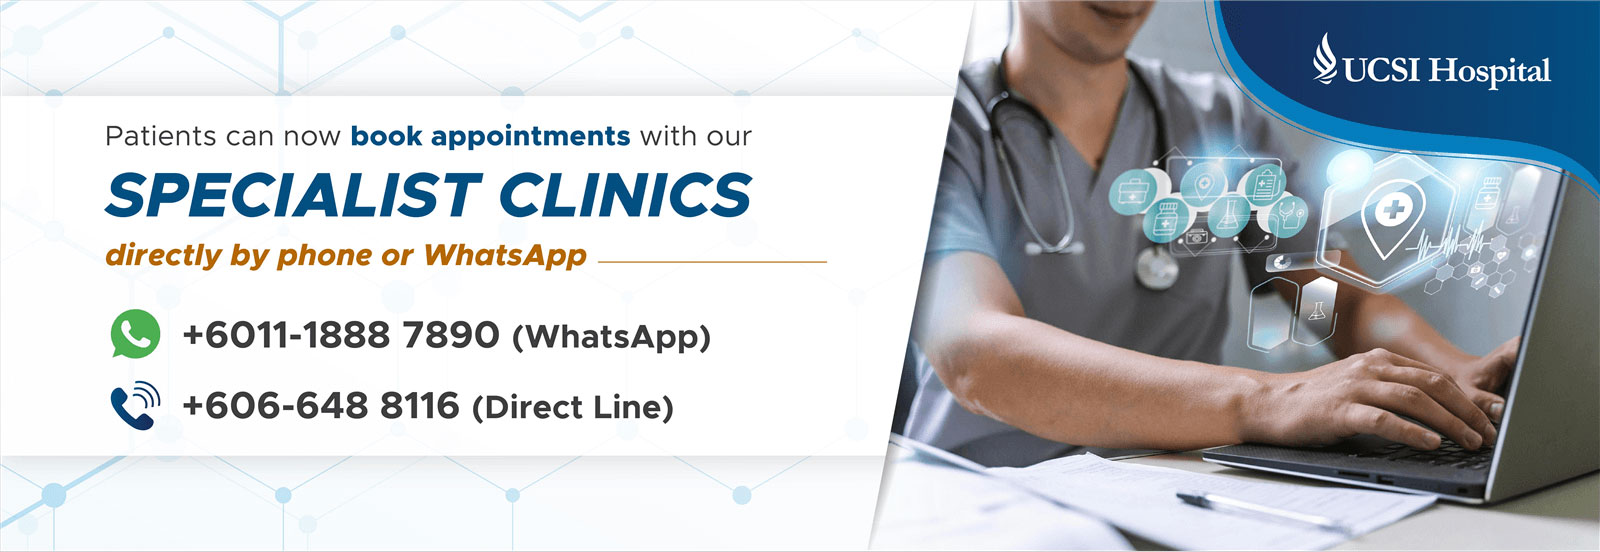 Direct Line for Specialist Clinics_Web Banner_EN